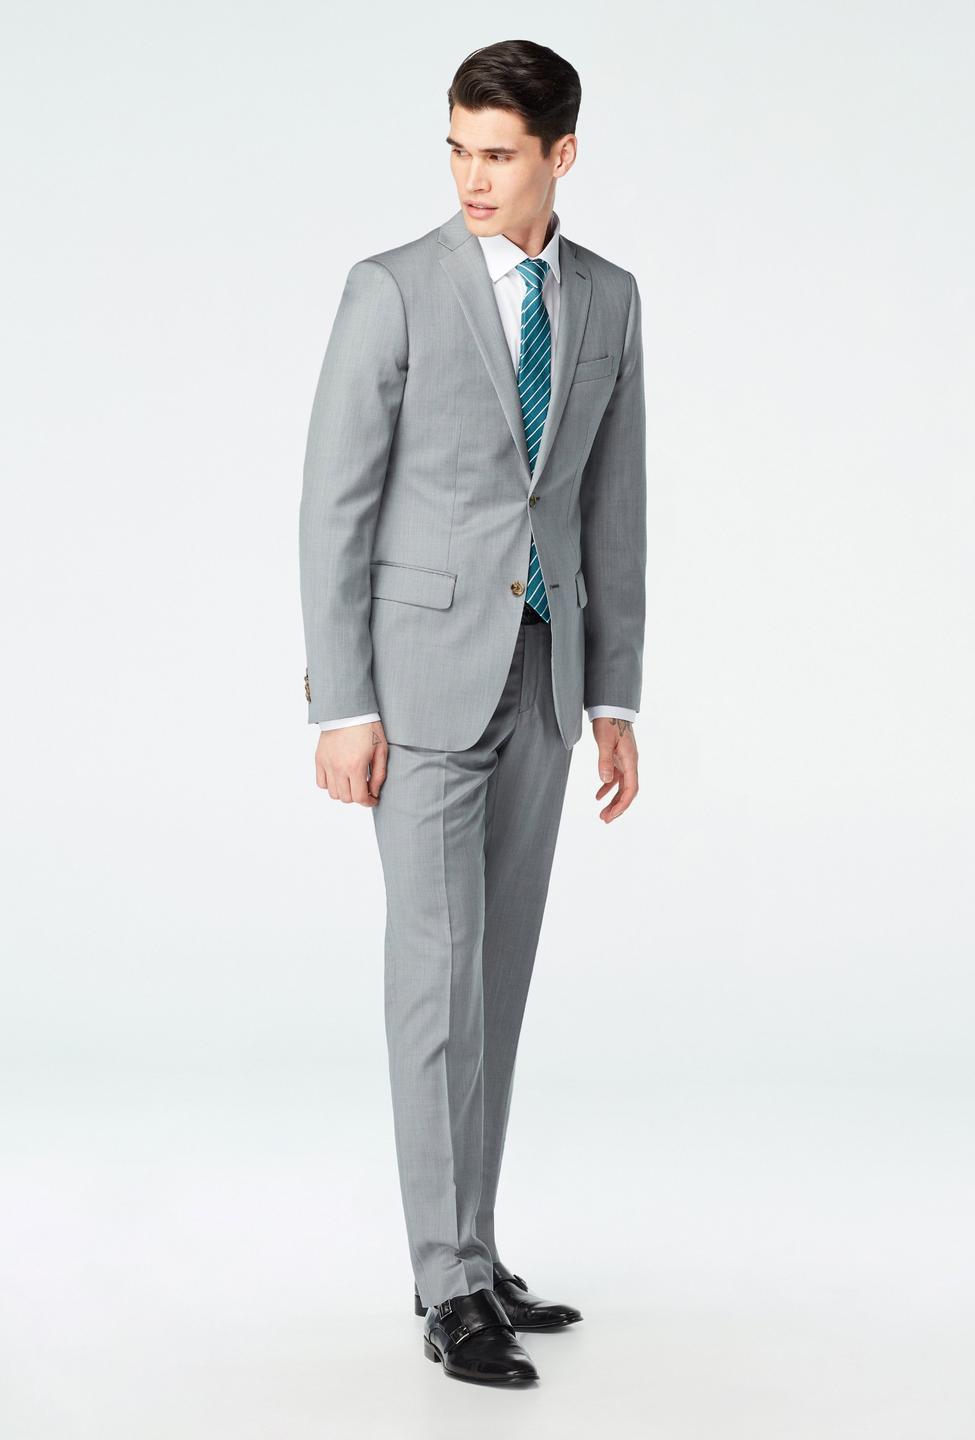 Gray blazer - Hemsworth Solid Design from Premium Indochino Collection